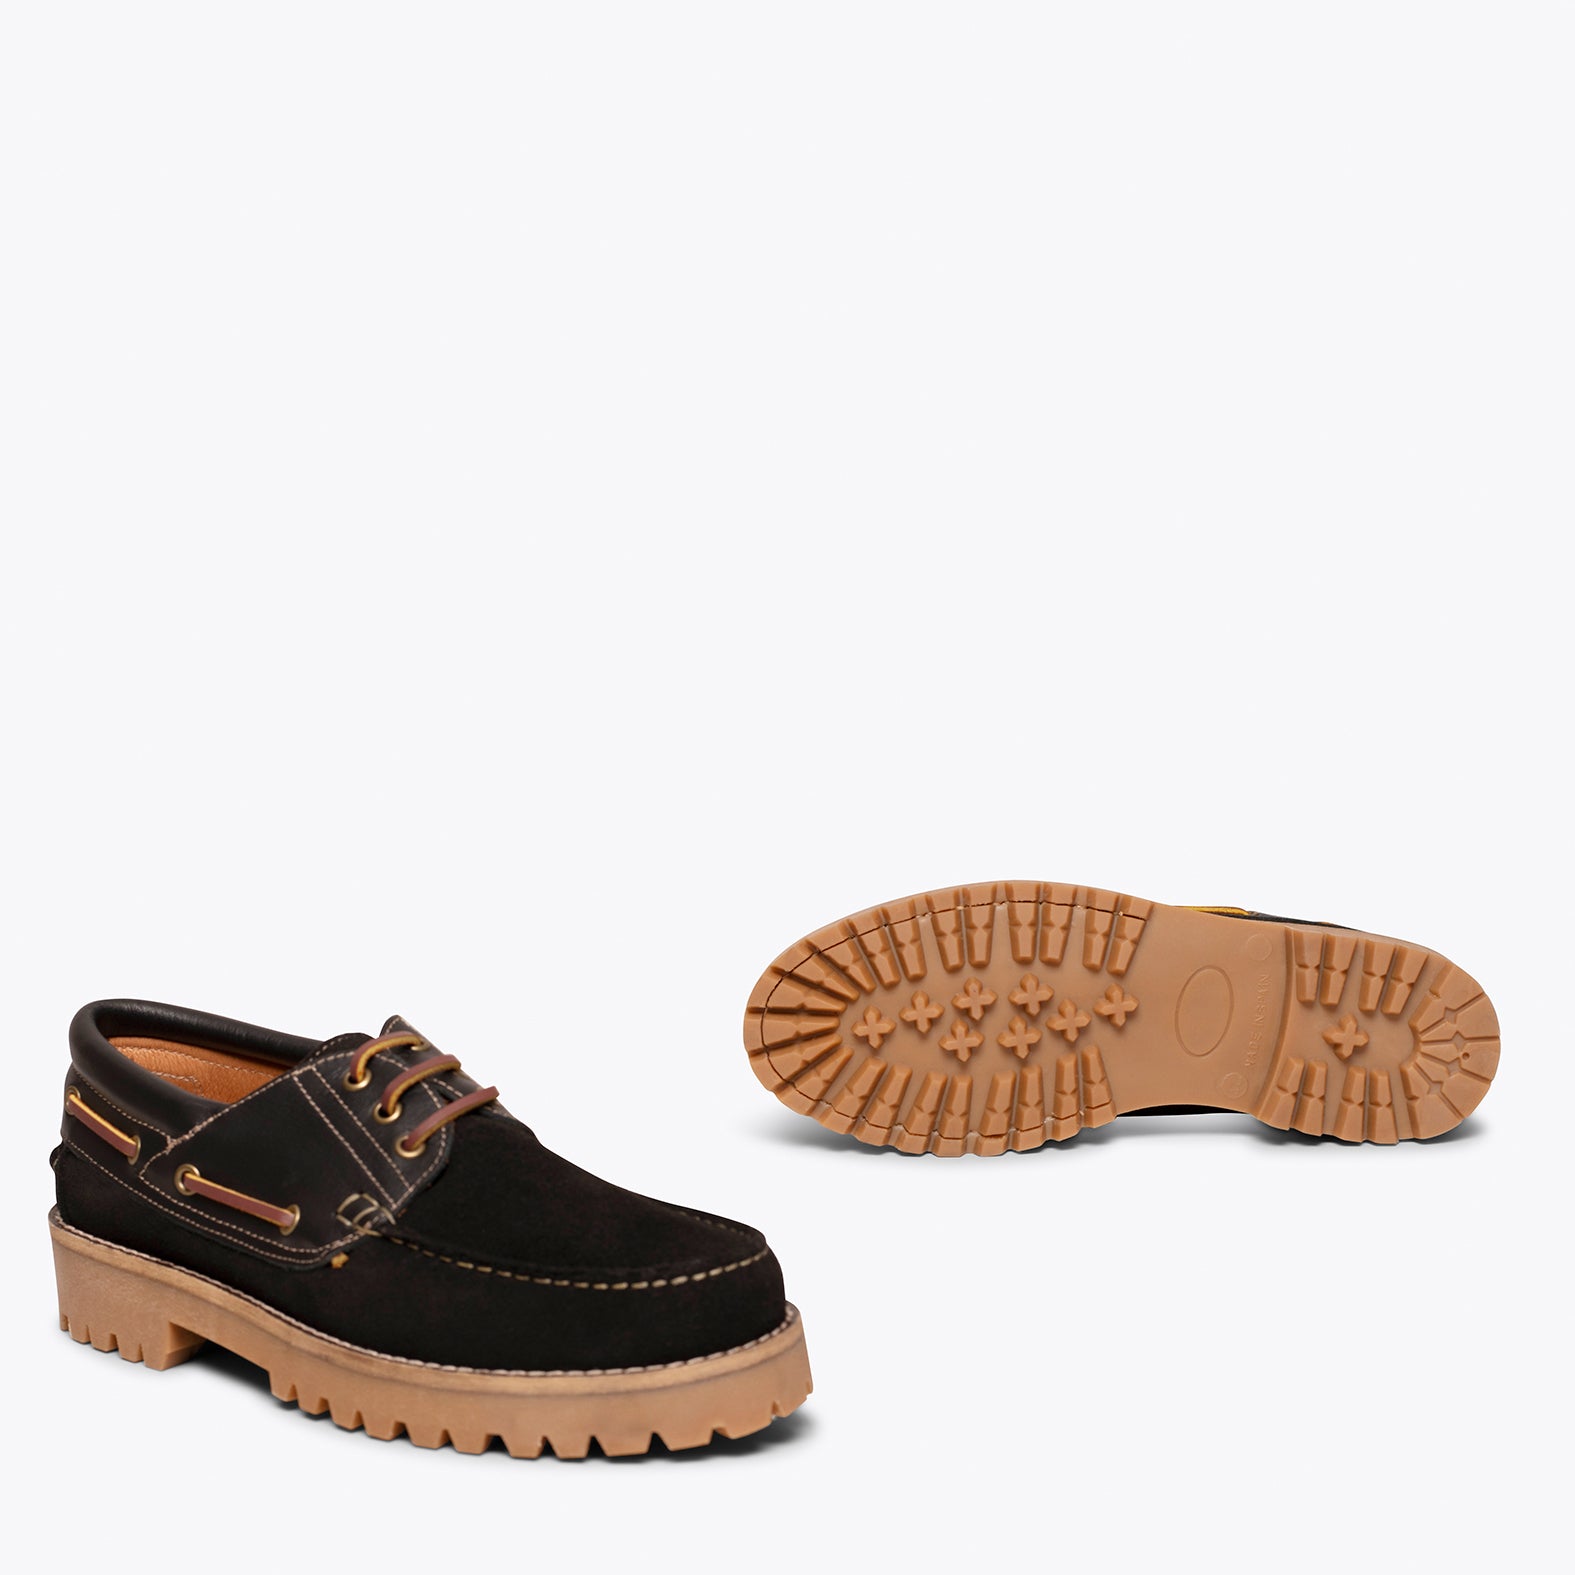 NAUTIC – BLACK boat shoes for men